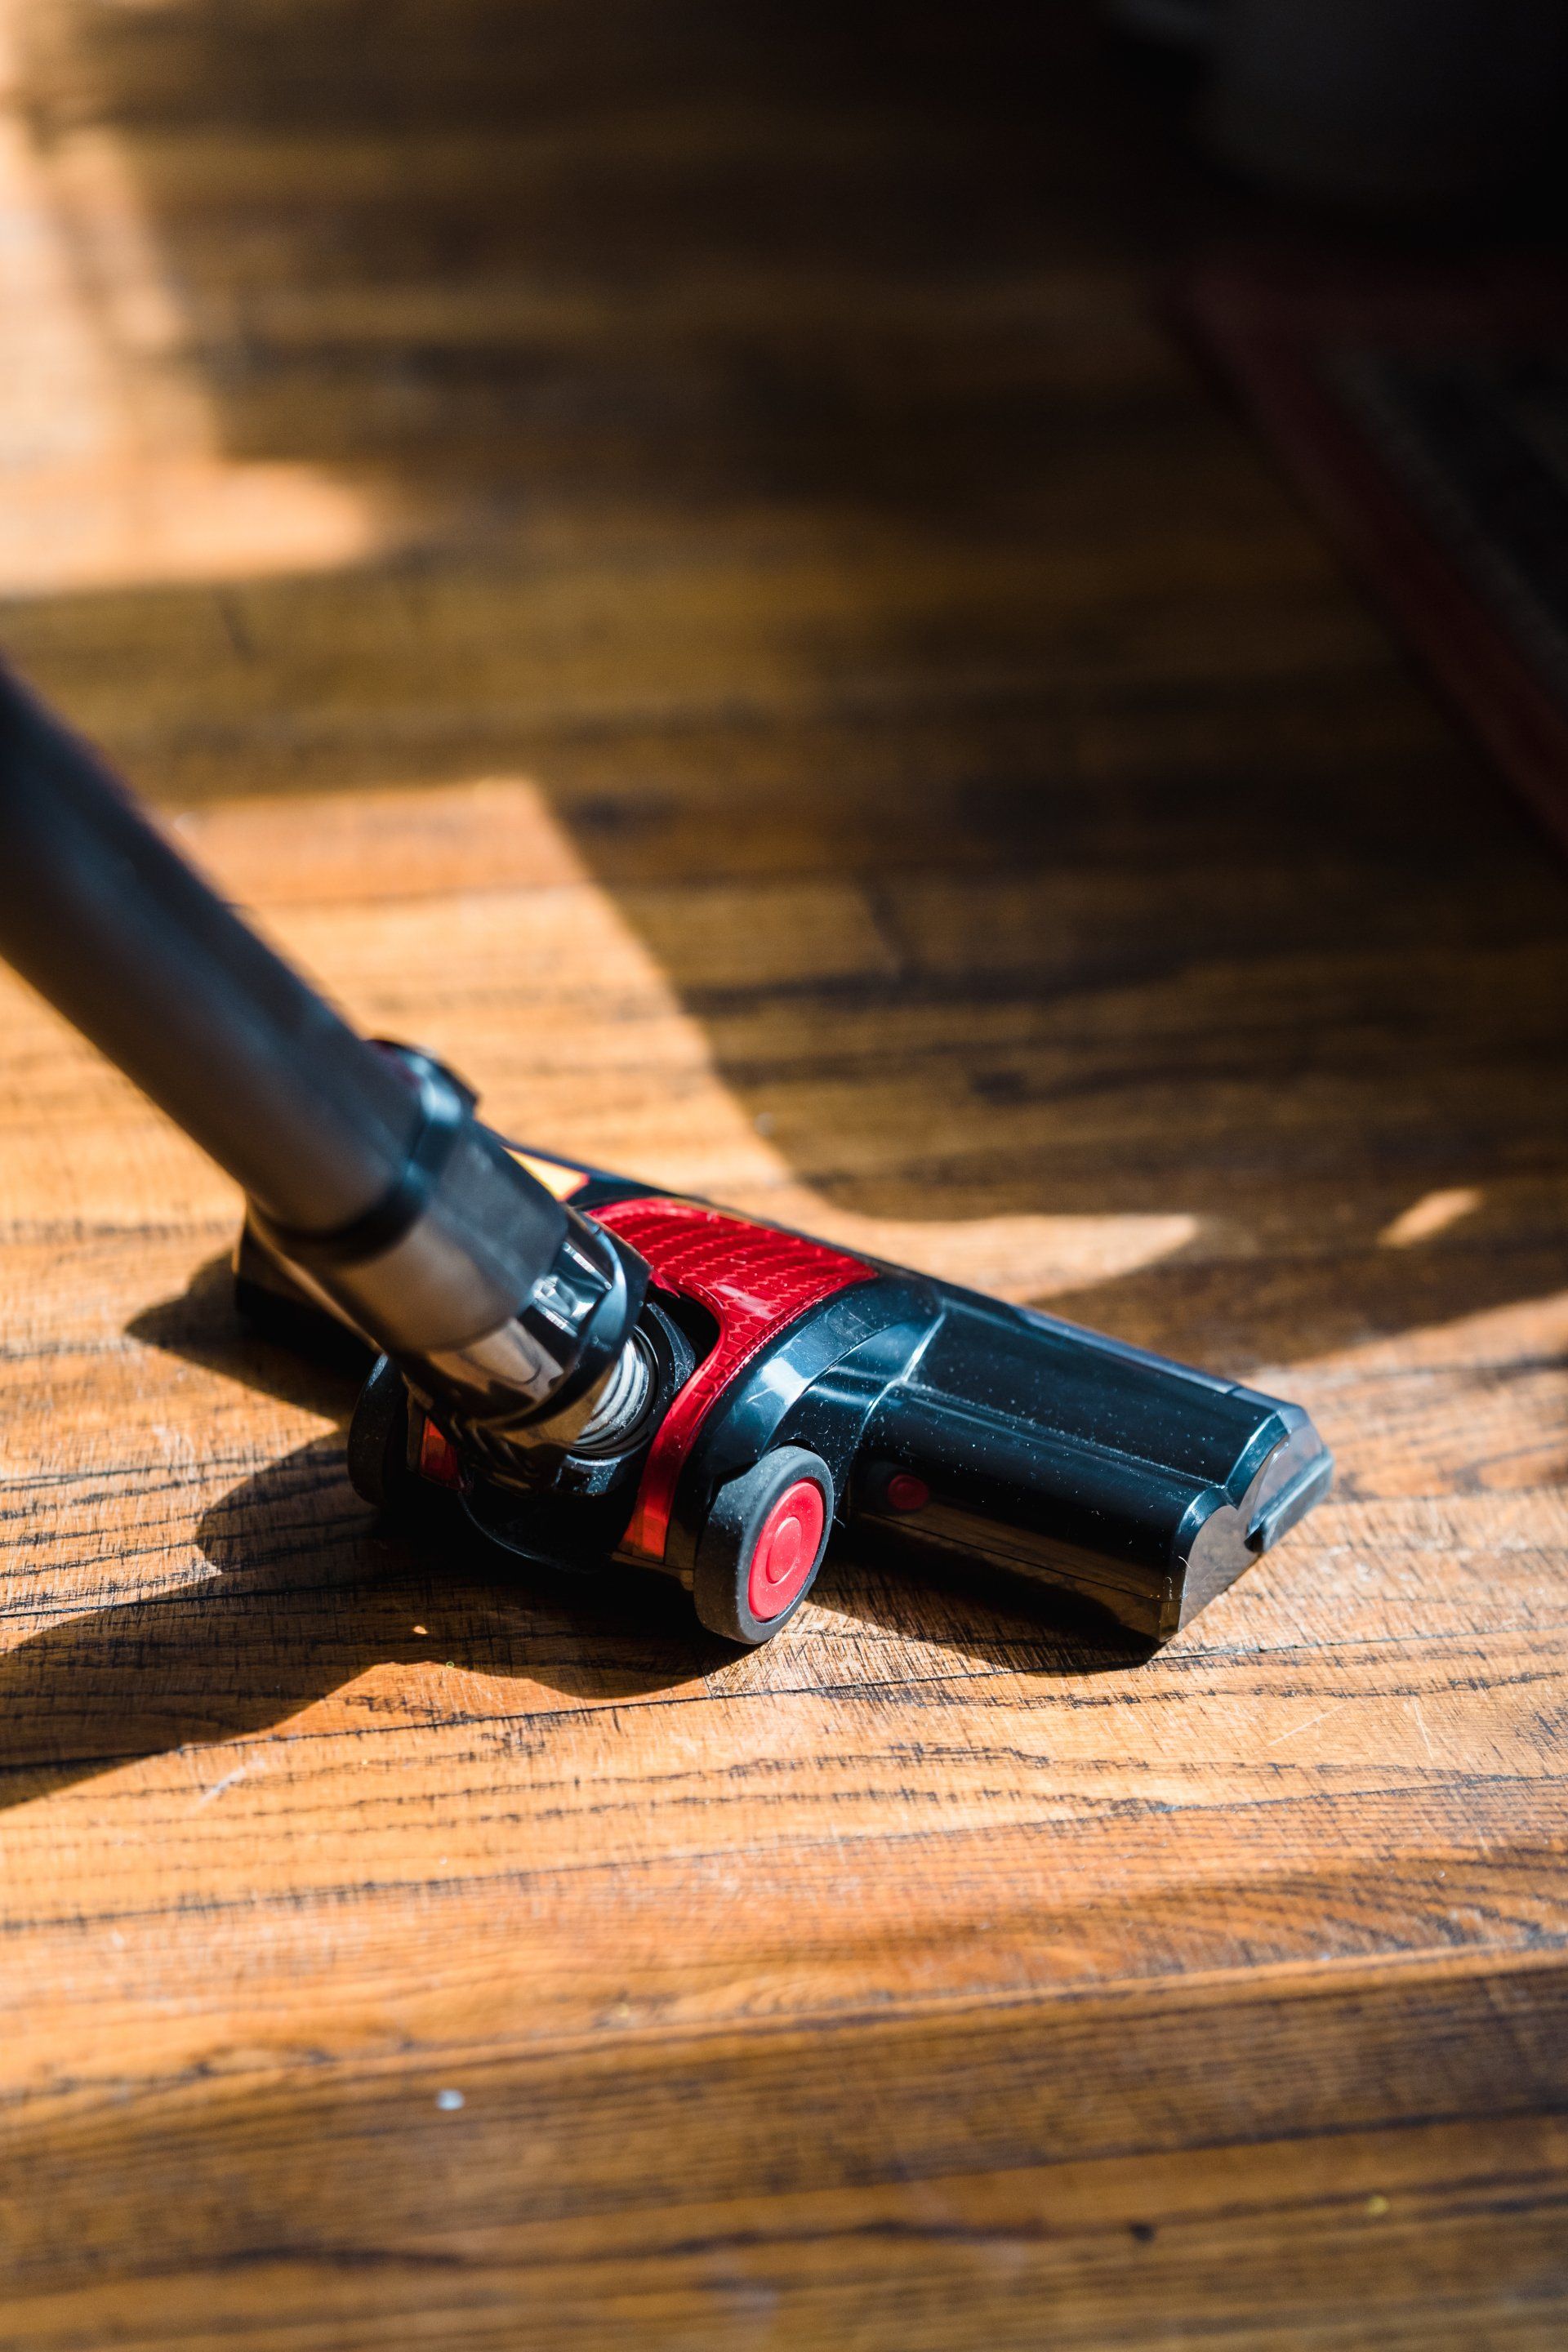 Vacuuming hardwood flooring